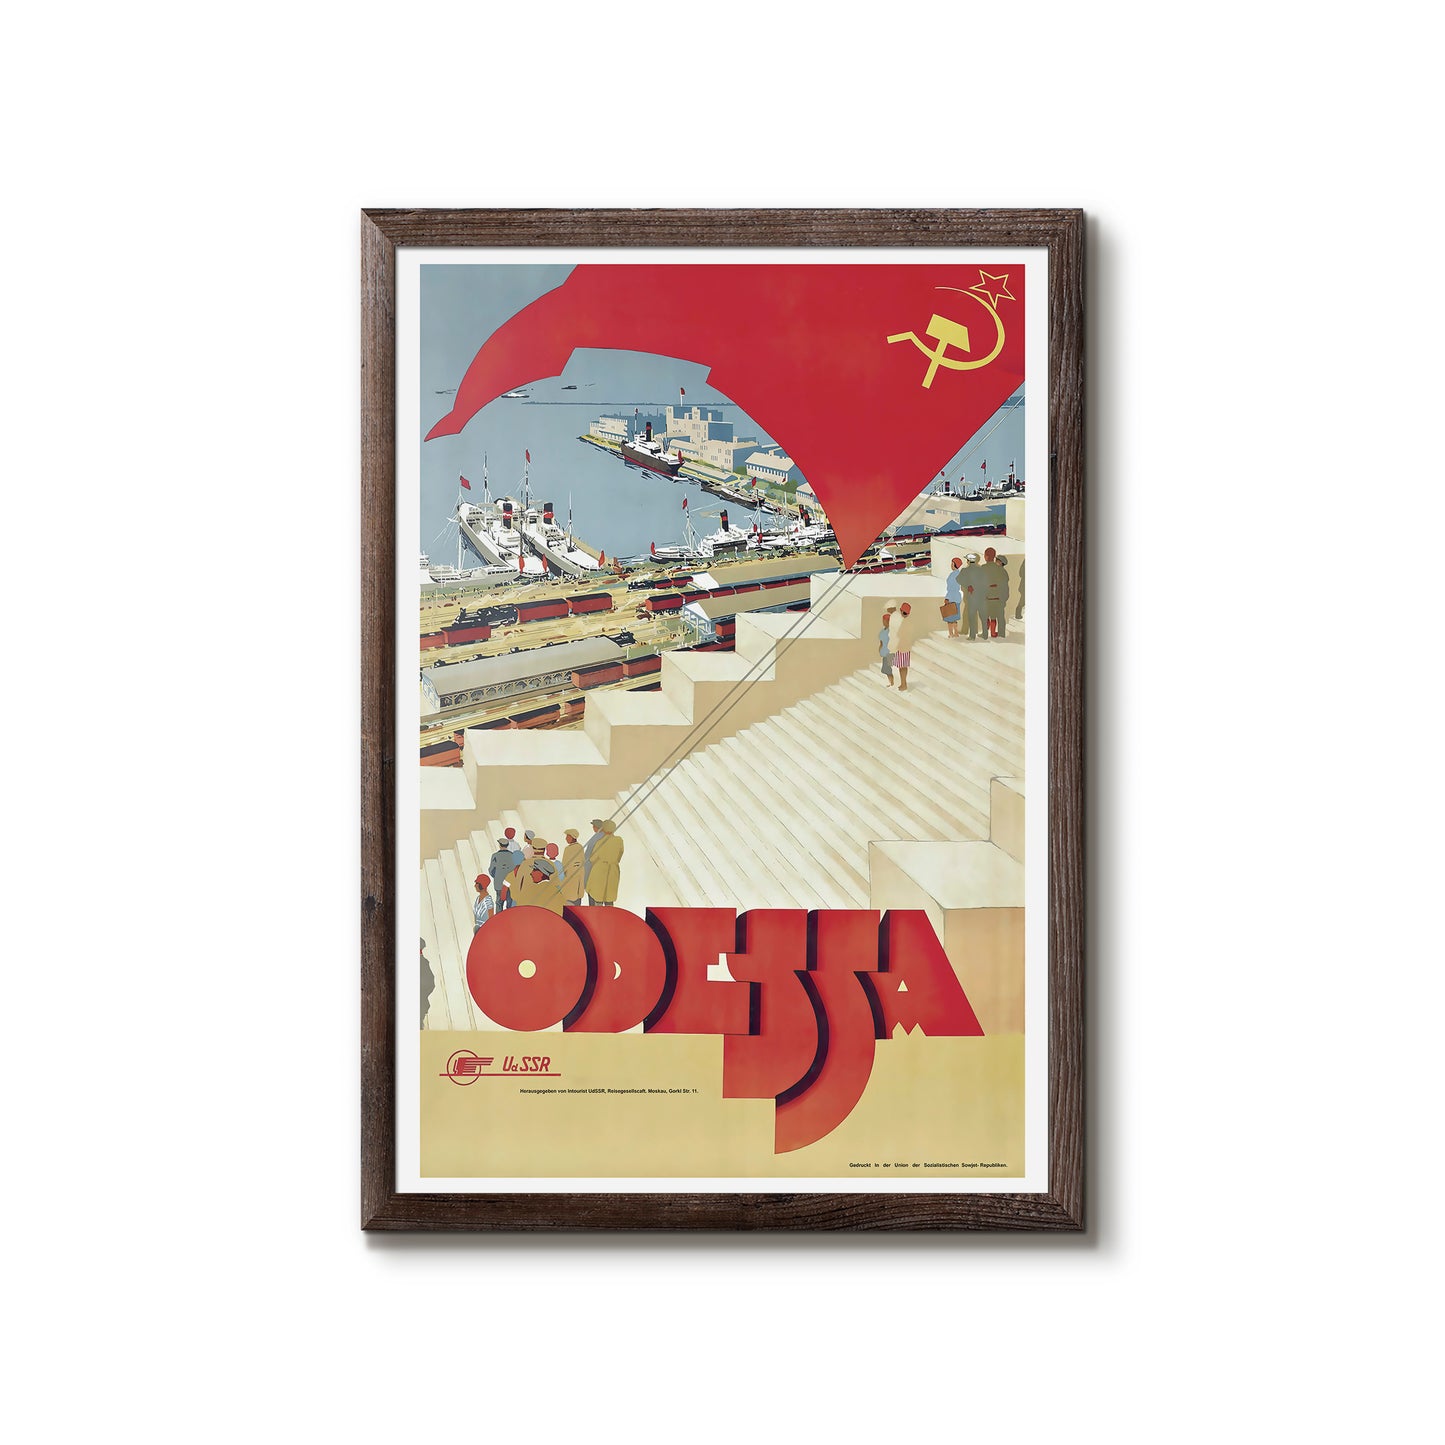 Odessa - Travel poster